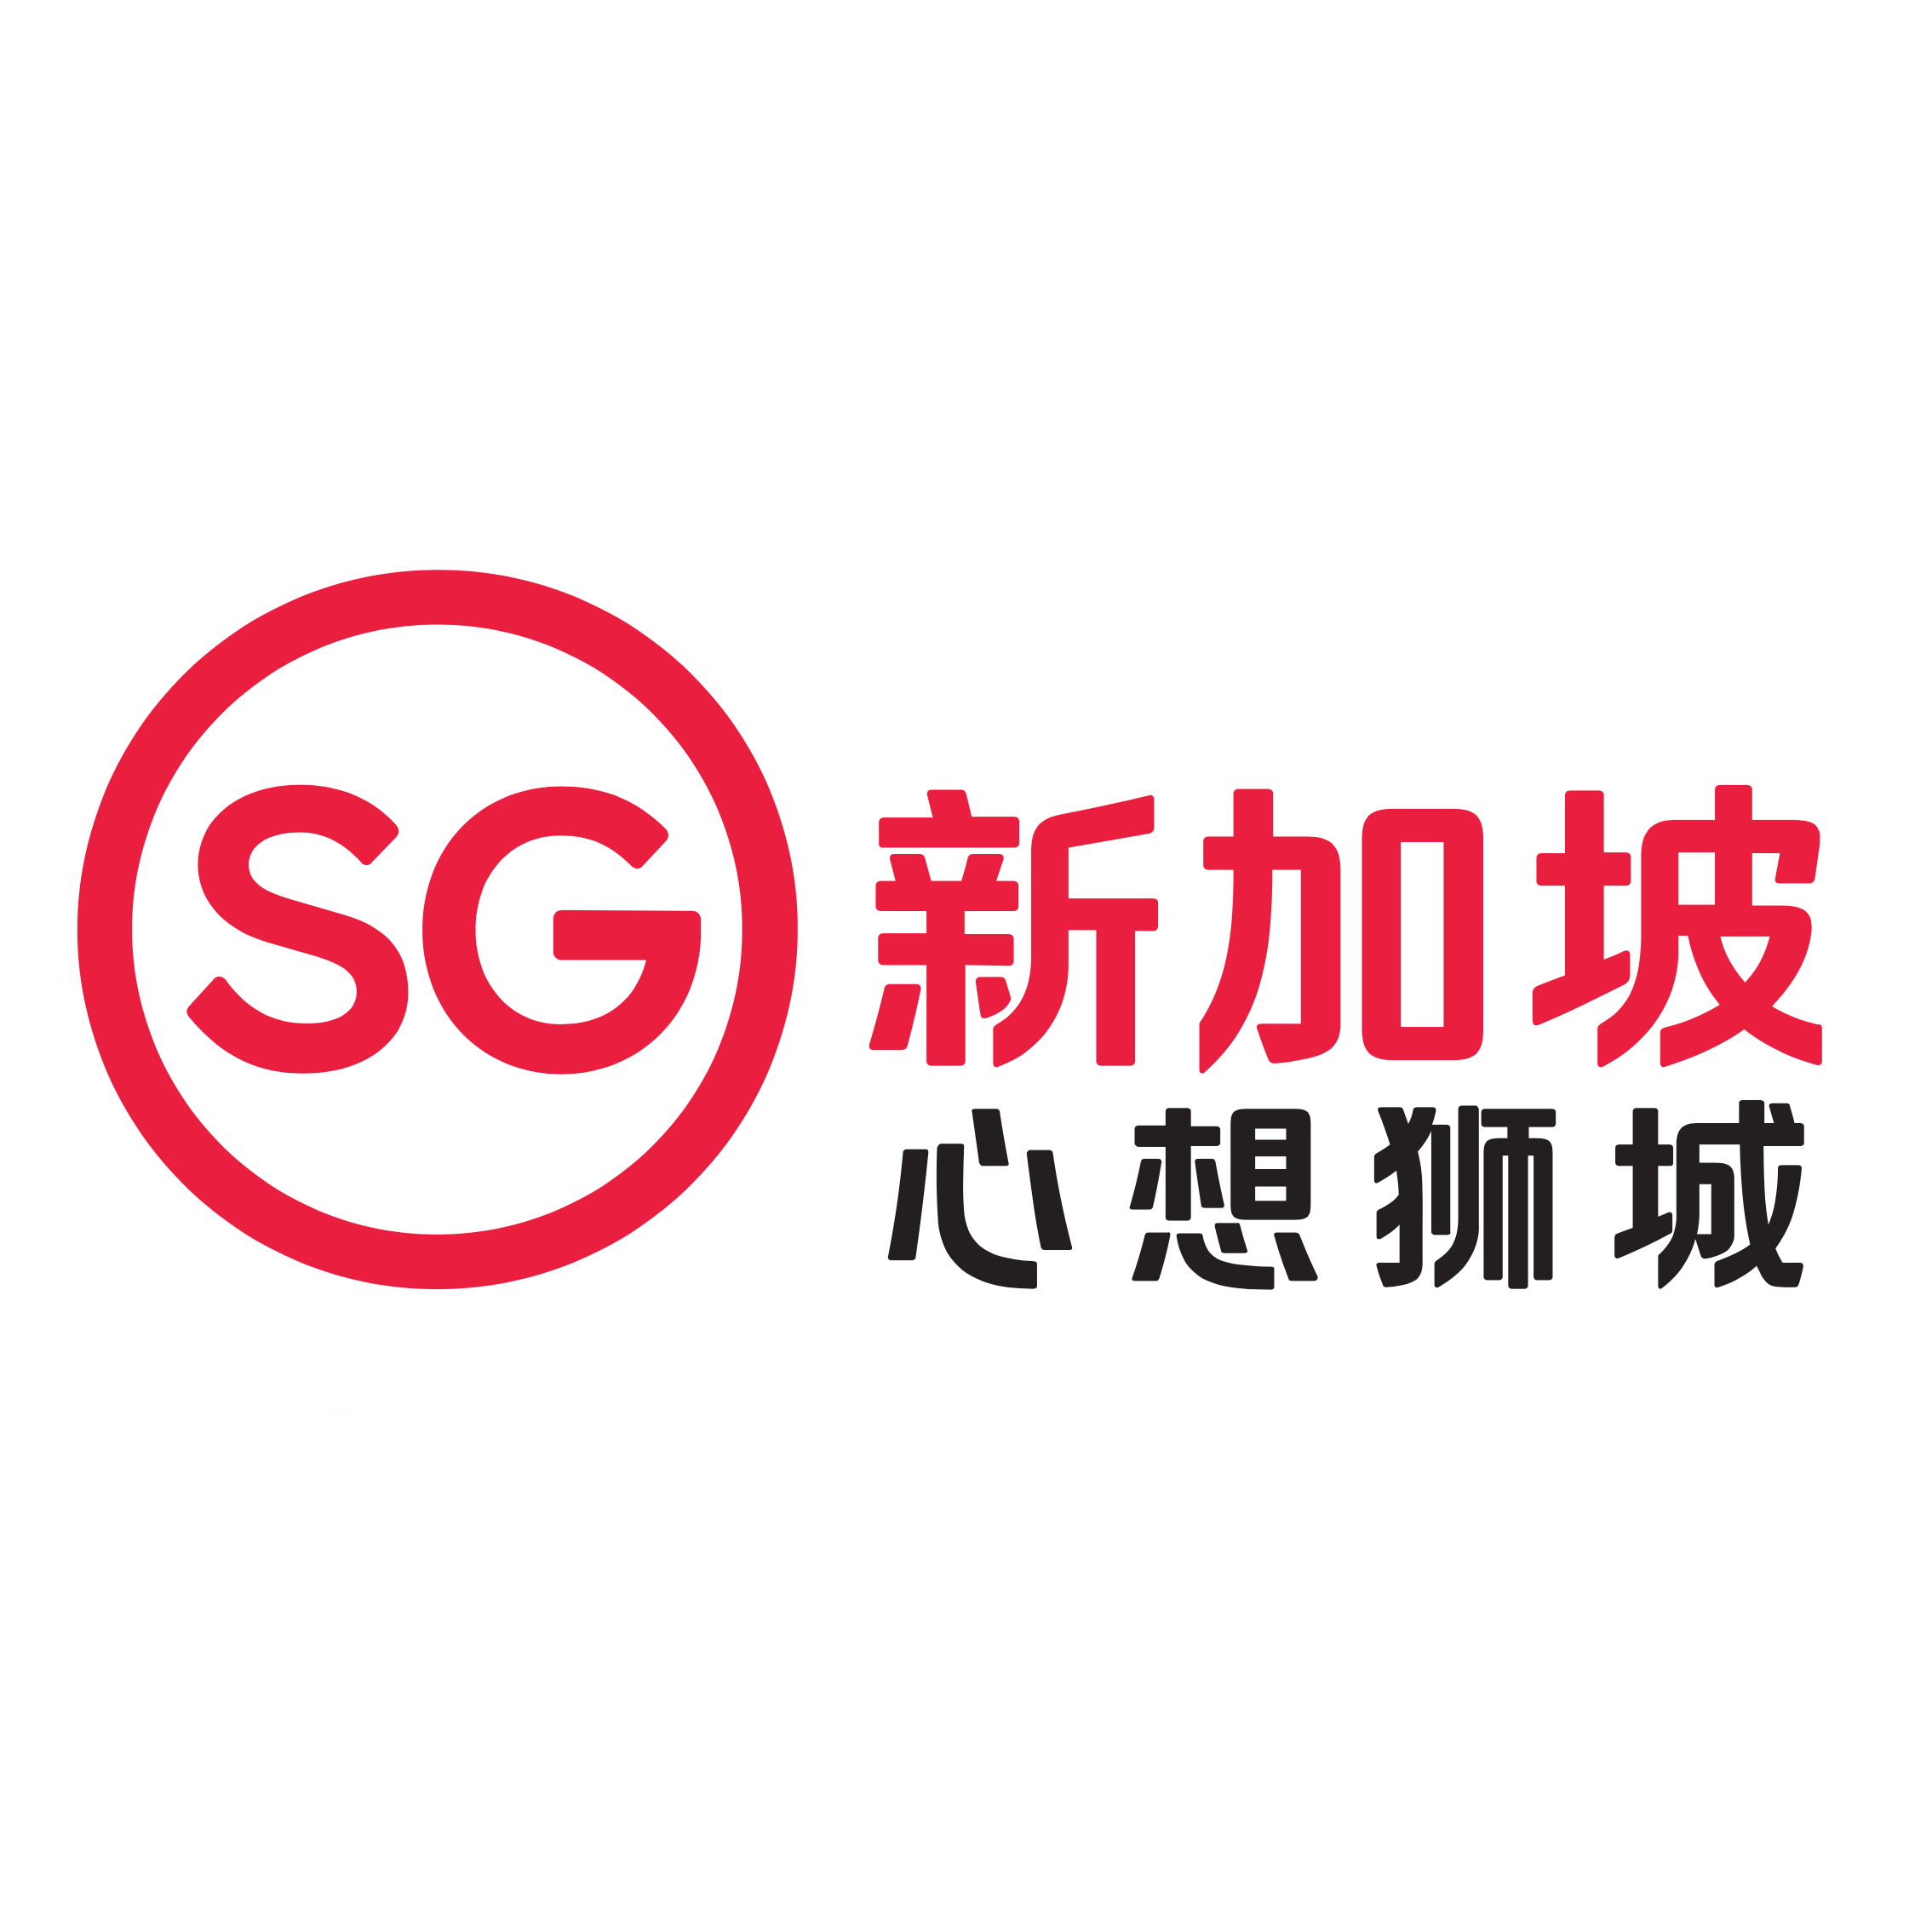 STB Logo - STB logo